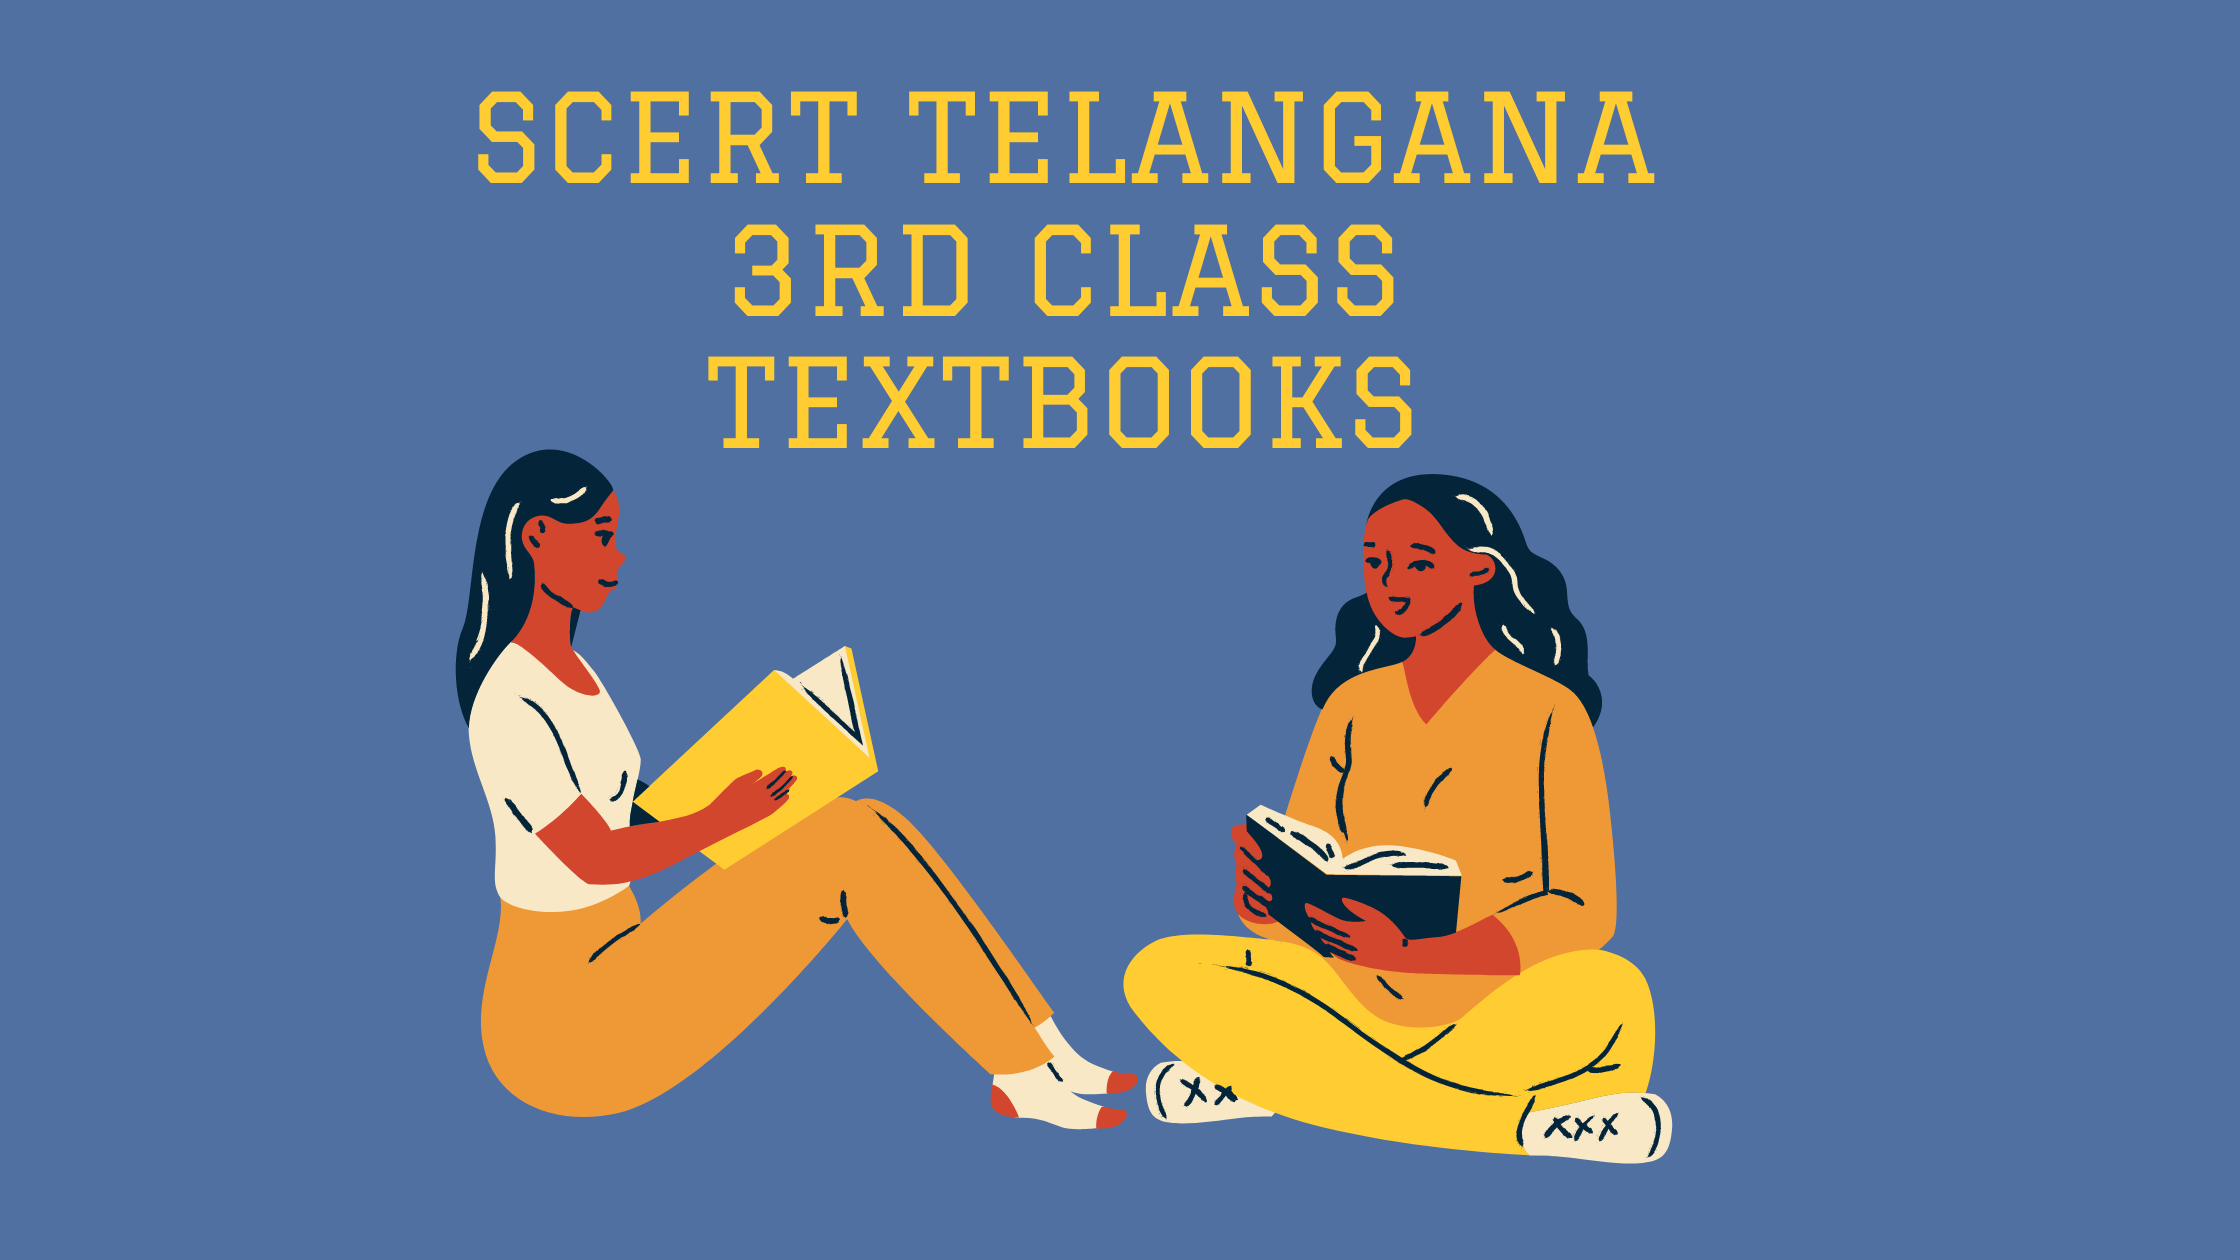 SCERT Telangana 3rd Class Textbooks